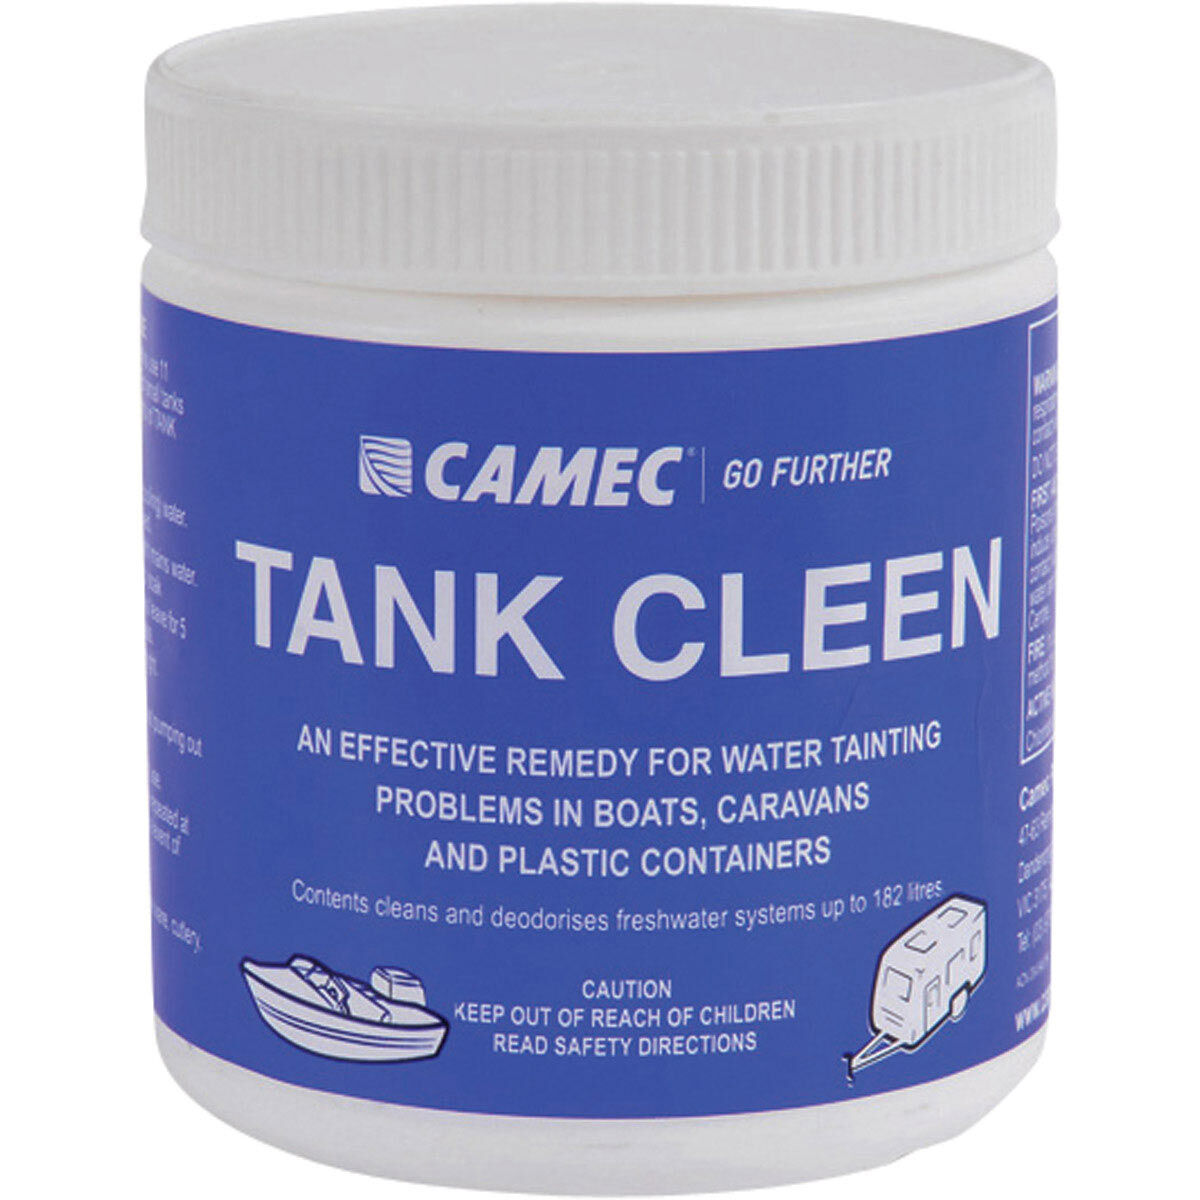 Tank Cleen - 200g, , scaau_hi-res